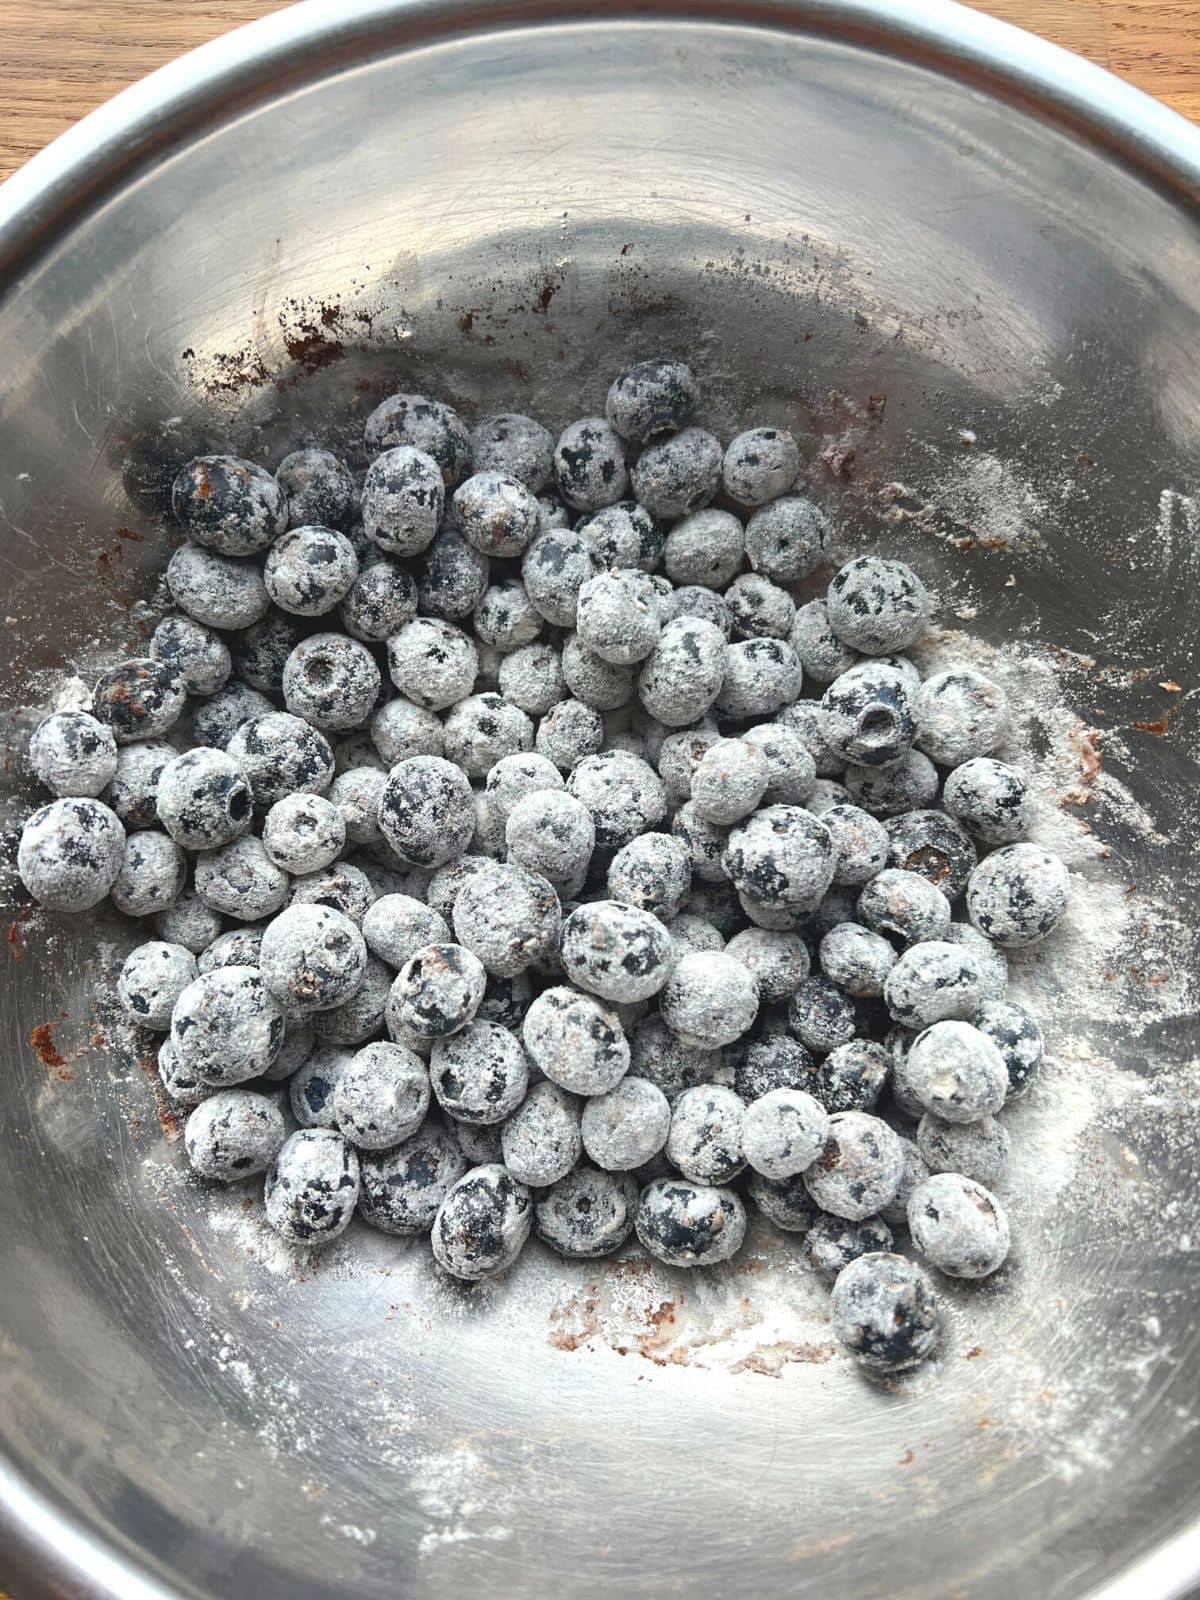 Blueberries tossed in flour and cinnamon in metal bowl.